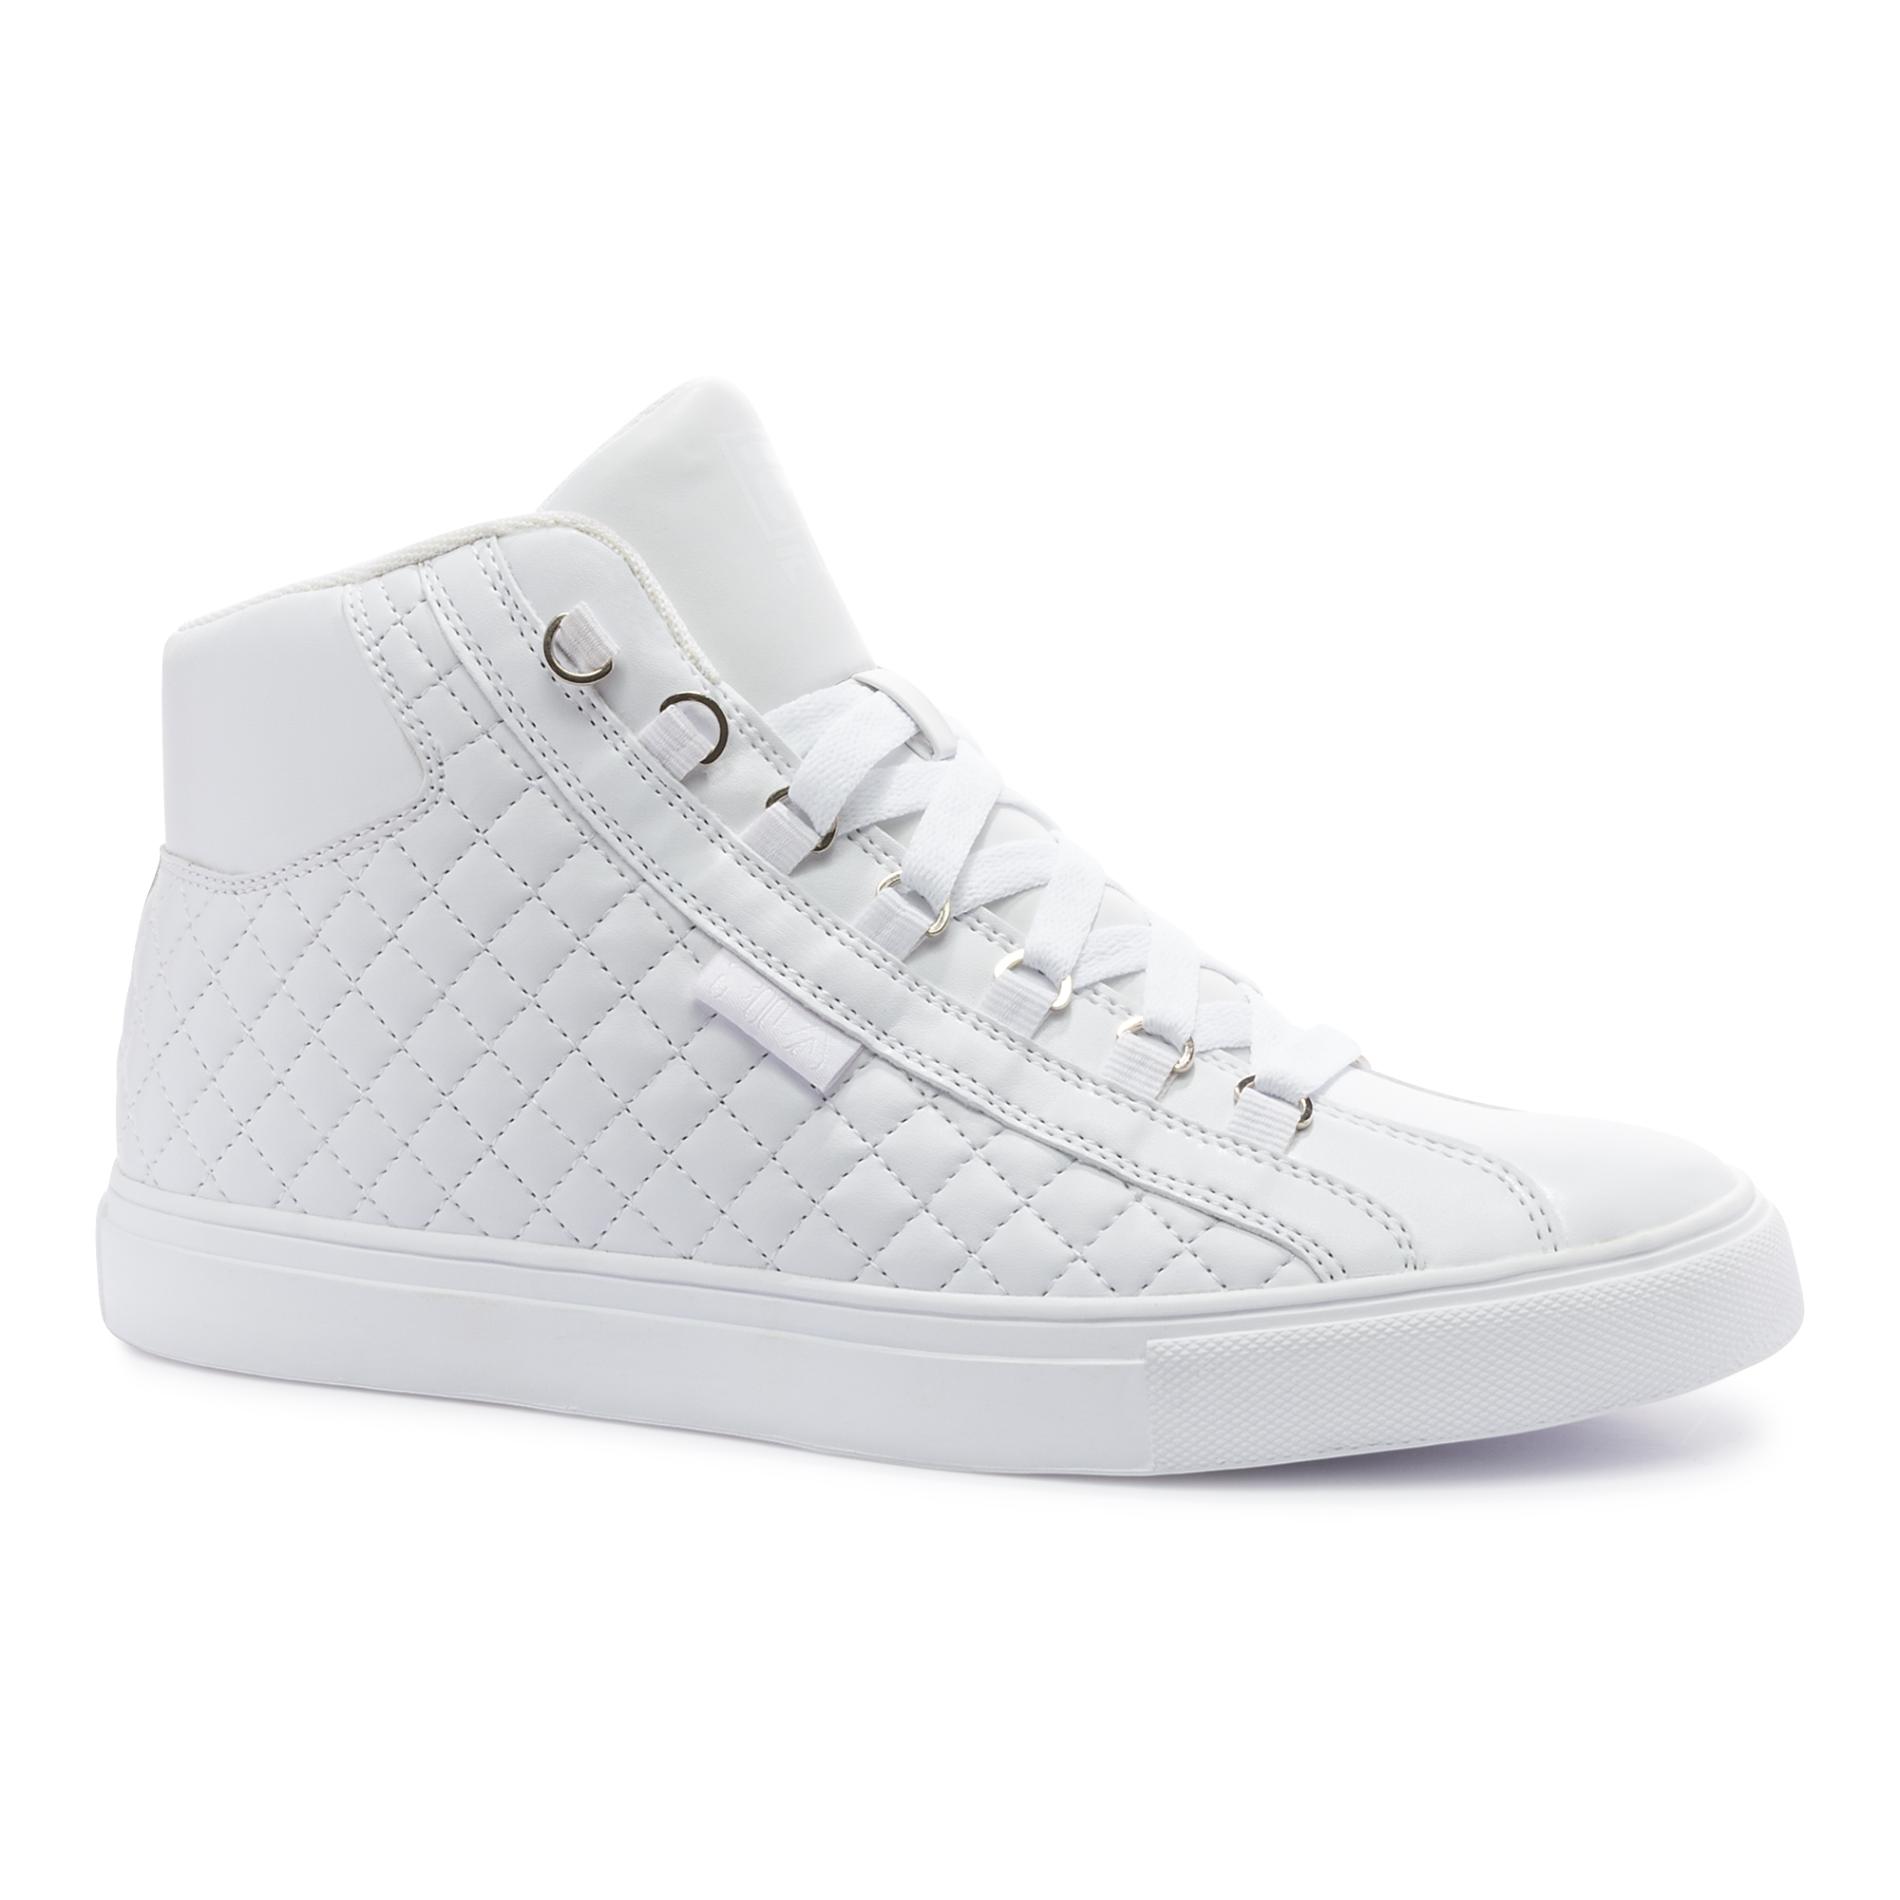 Fila Men's Oxidize 2 White High-Top Athletic Shoe